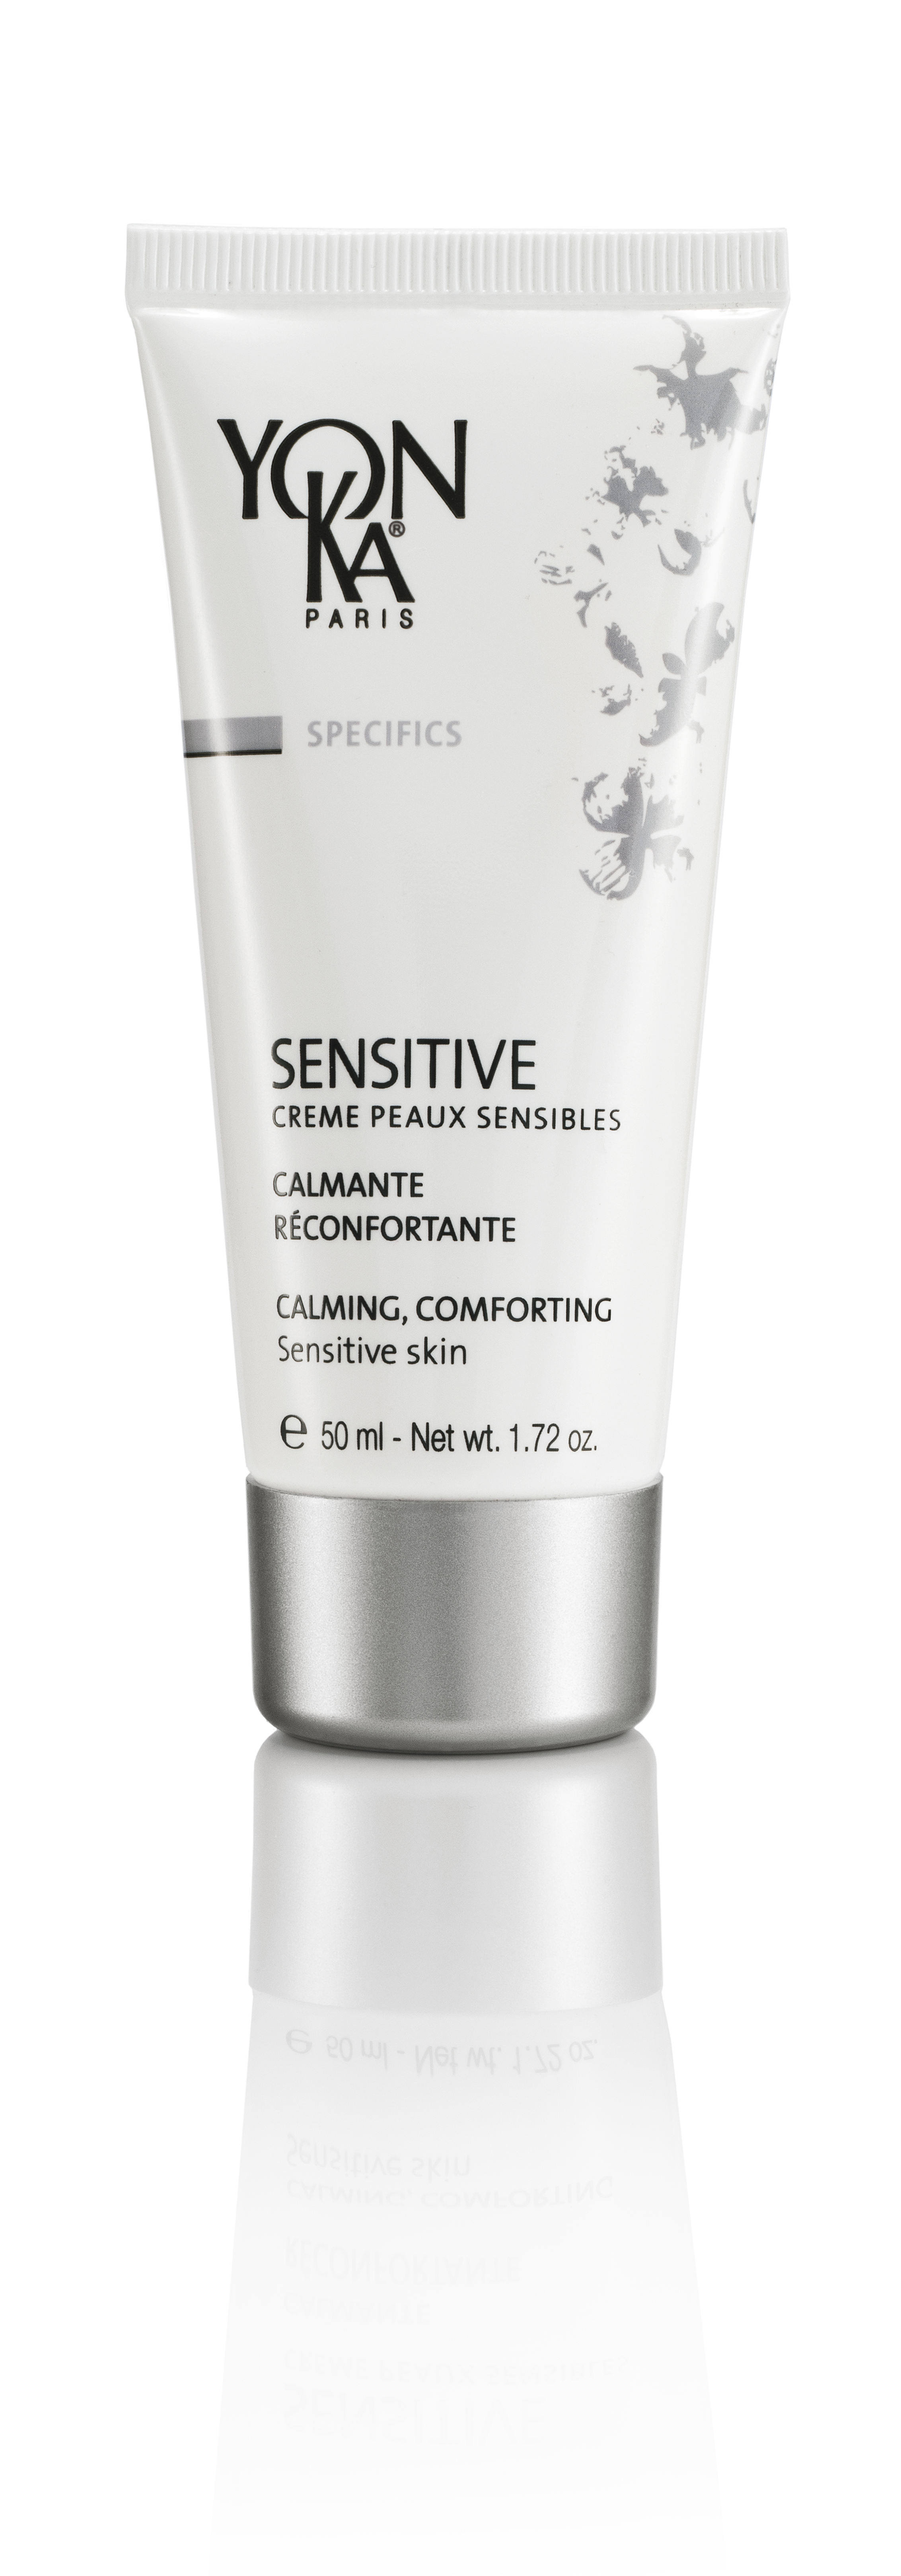 Sensitive Creme Peaux Sensibles (50ml)